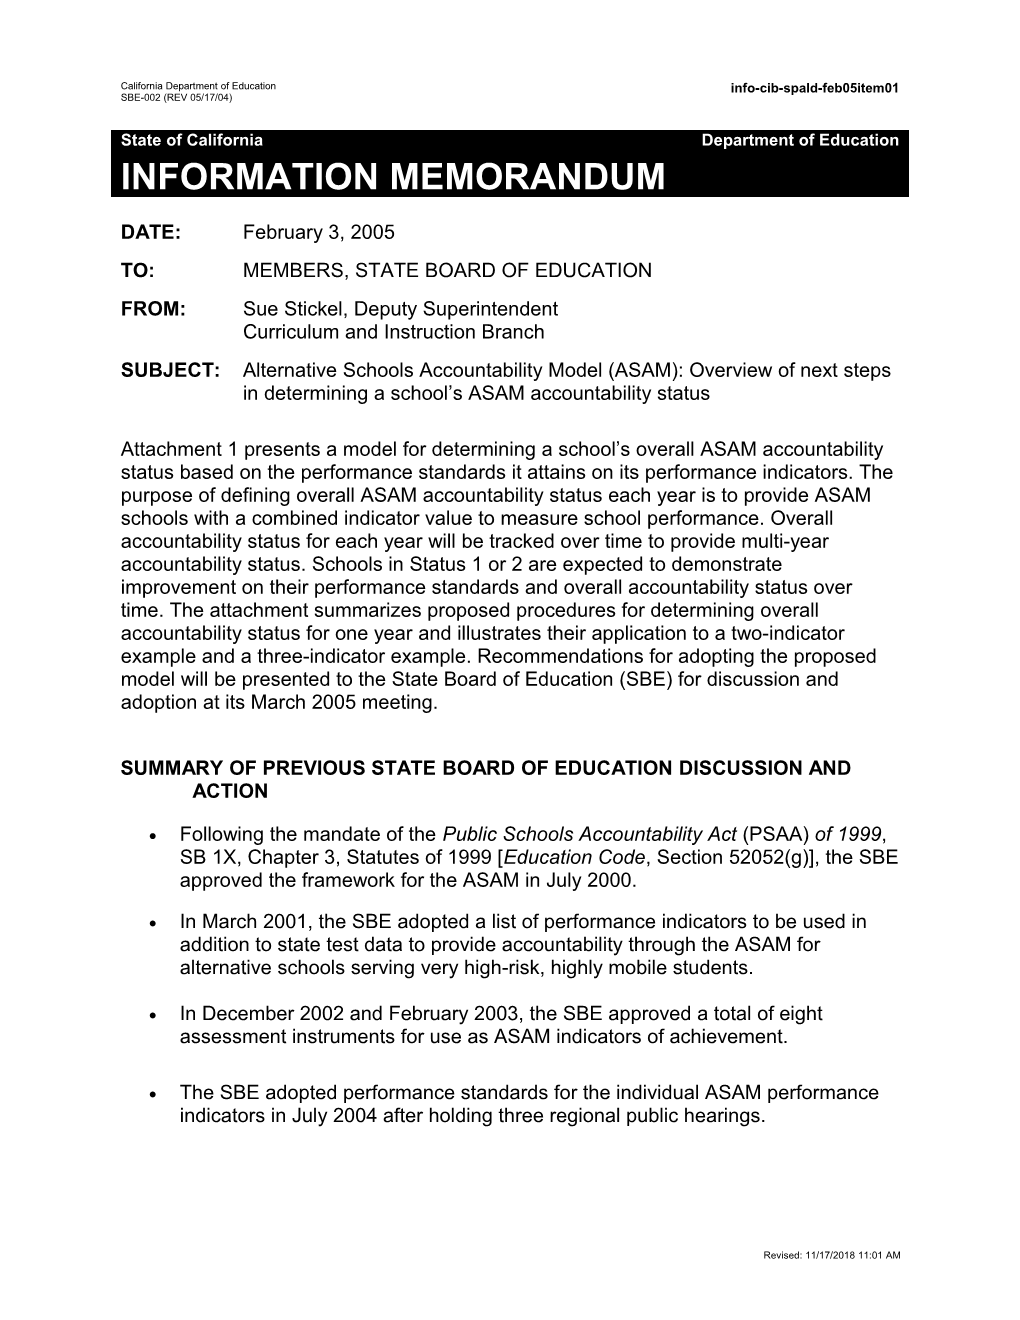 February 2005 SPALD Item 1 - Information Memorandum (CA State Board of Education)